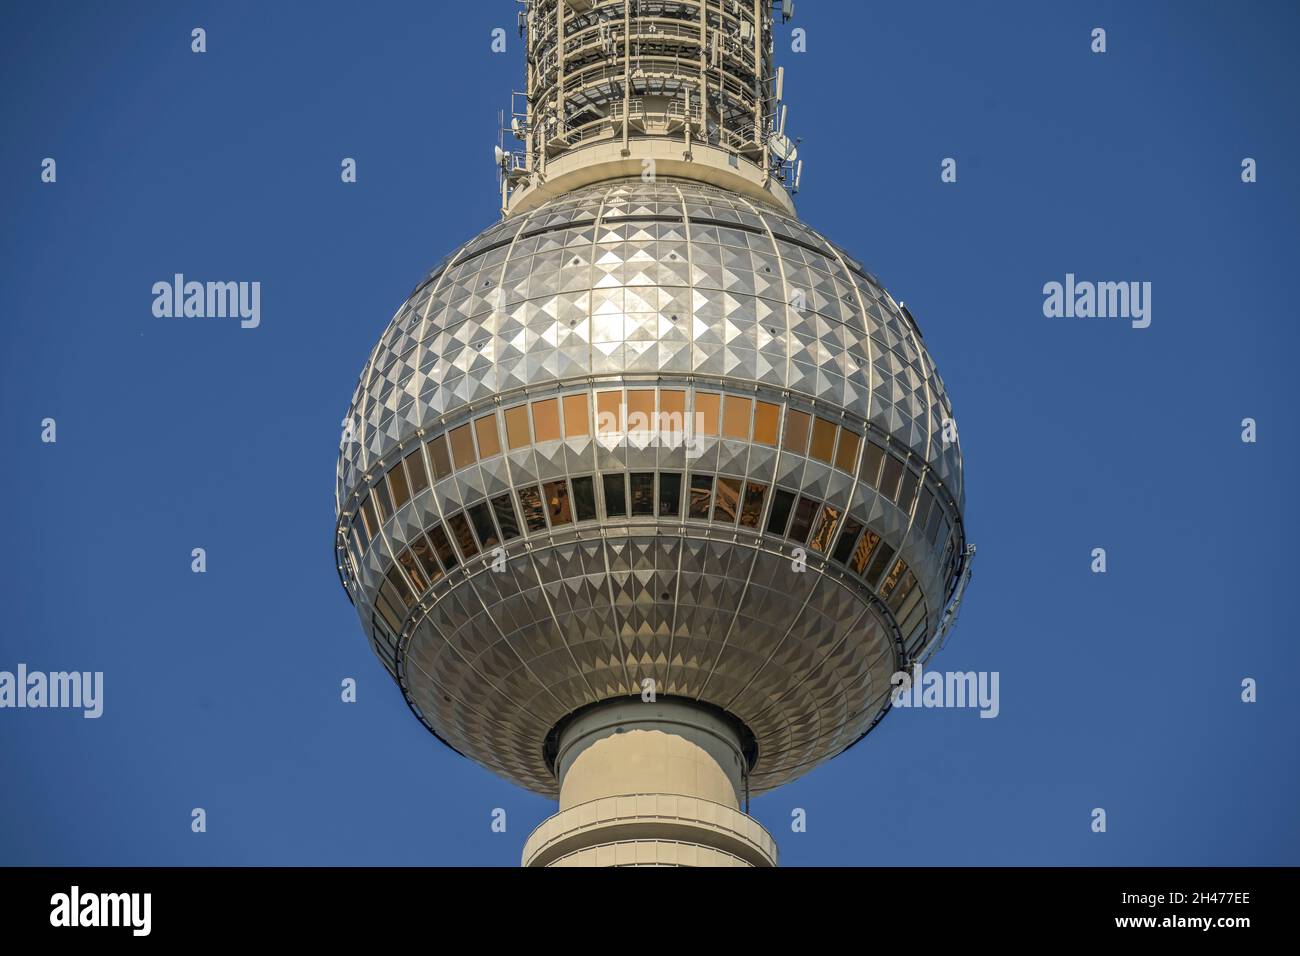 Fernsehturm, Alexanderplatz, Mitte, Berlin, Deutschland Banque D'Images